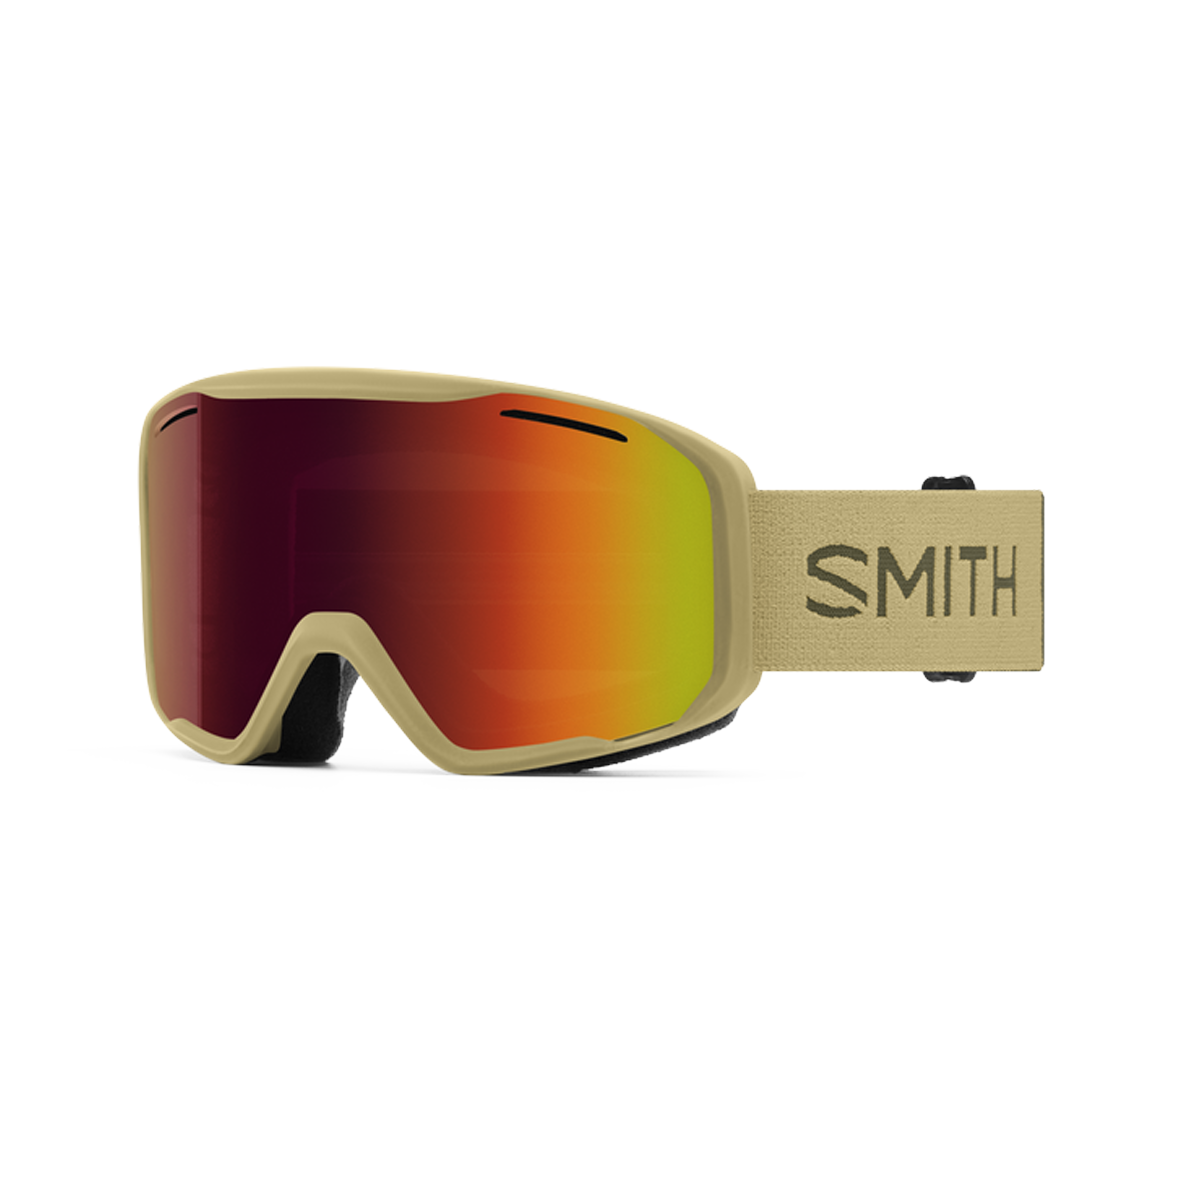 Smith Blazer Goggles - Sandstorm Forest